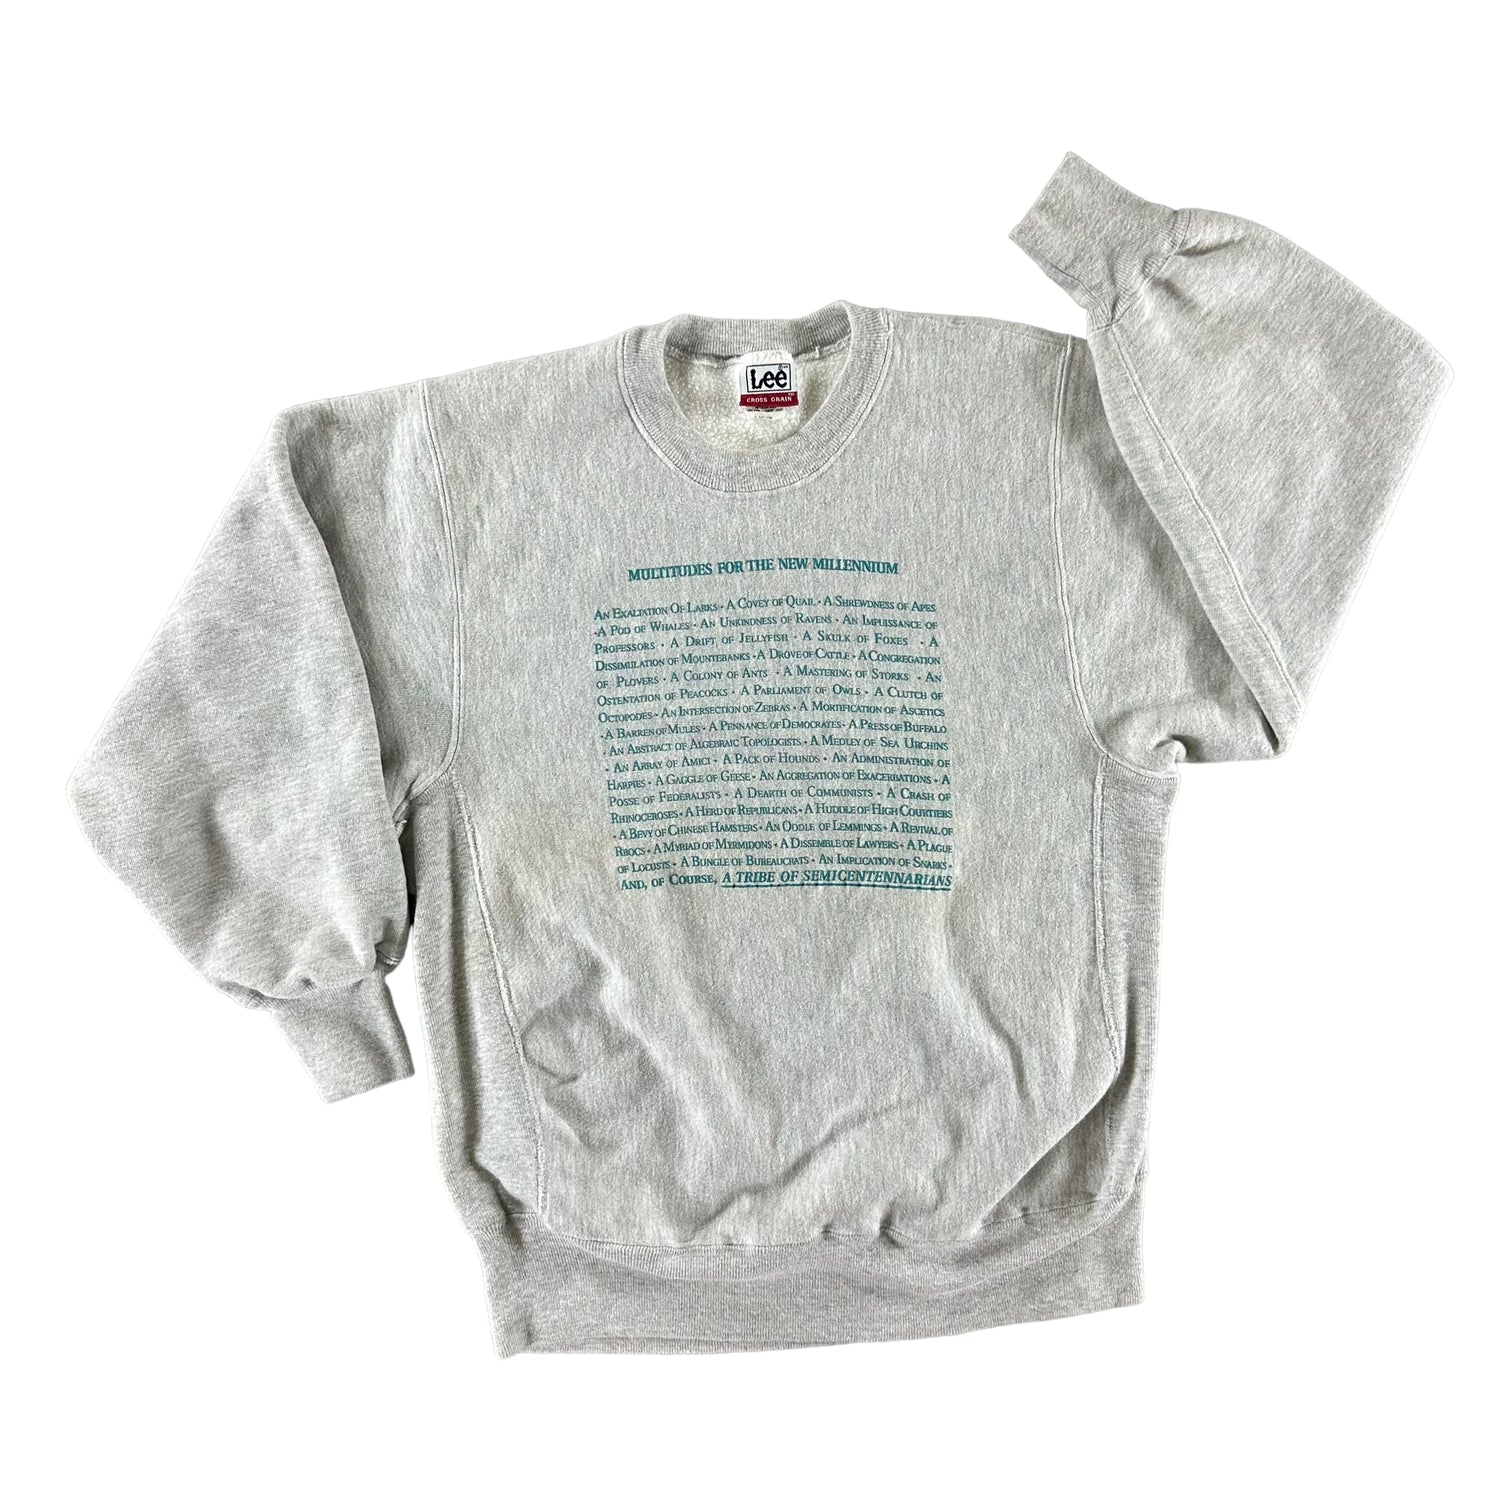 Vintage 1990s New Millennium Sweatshirt size Large